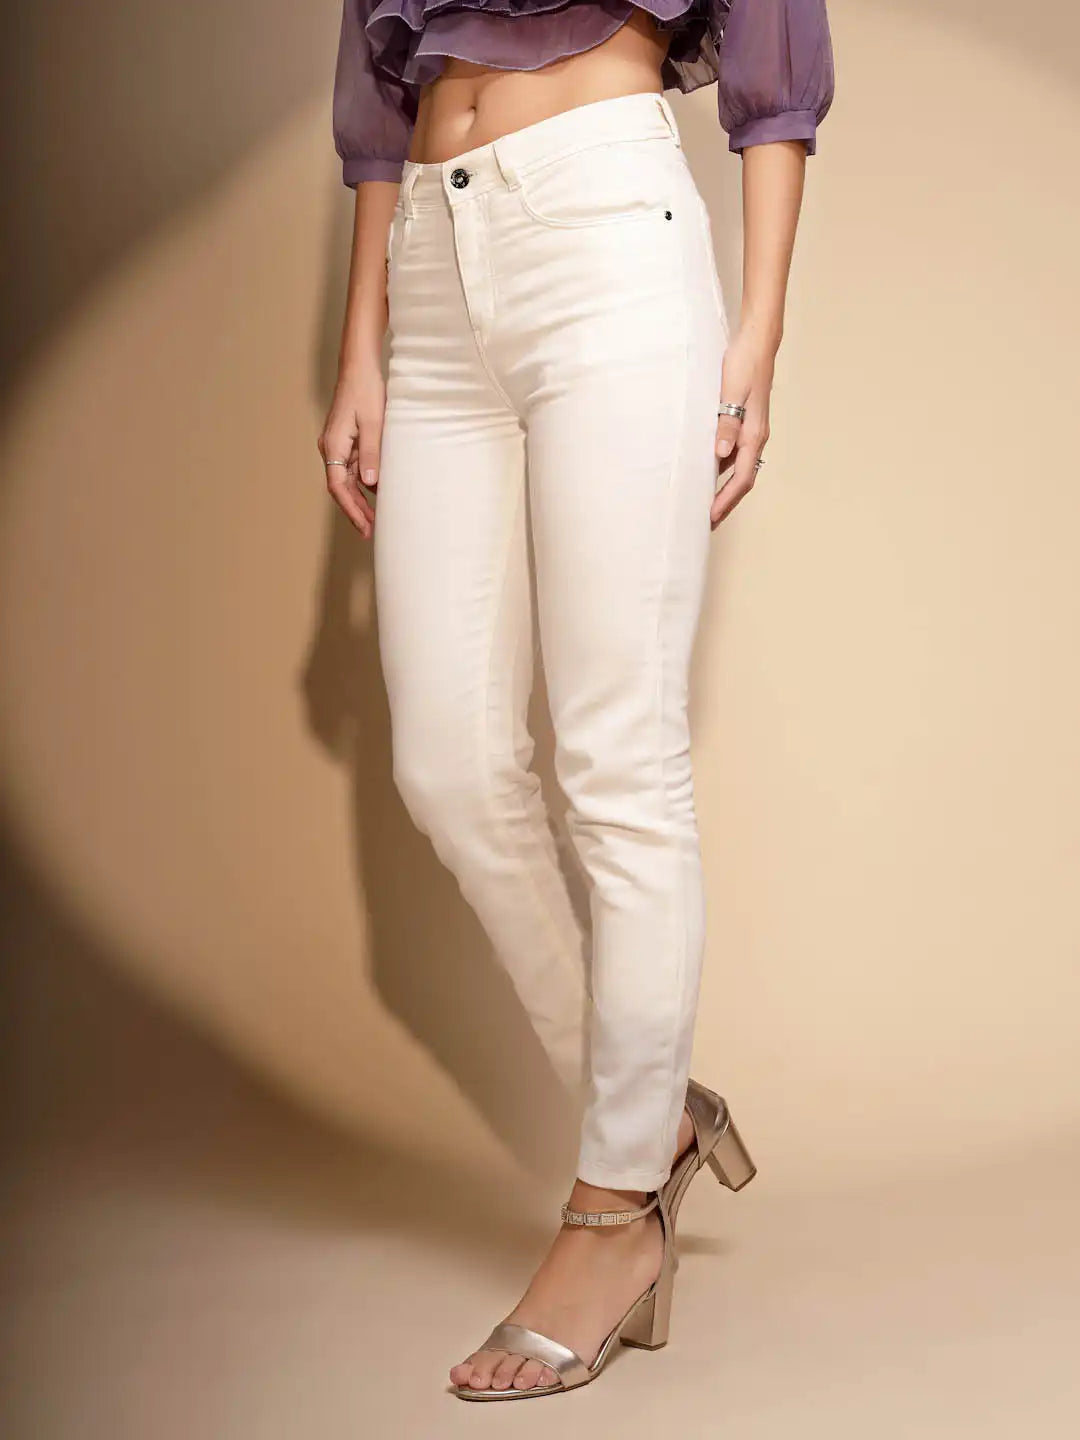 Women's Regular Fit Denim Low Rise White Jeans